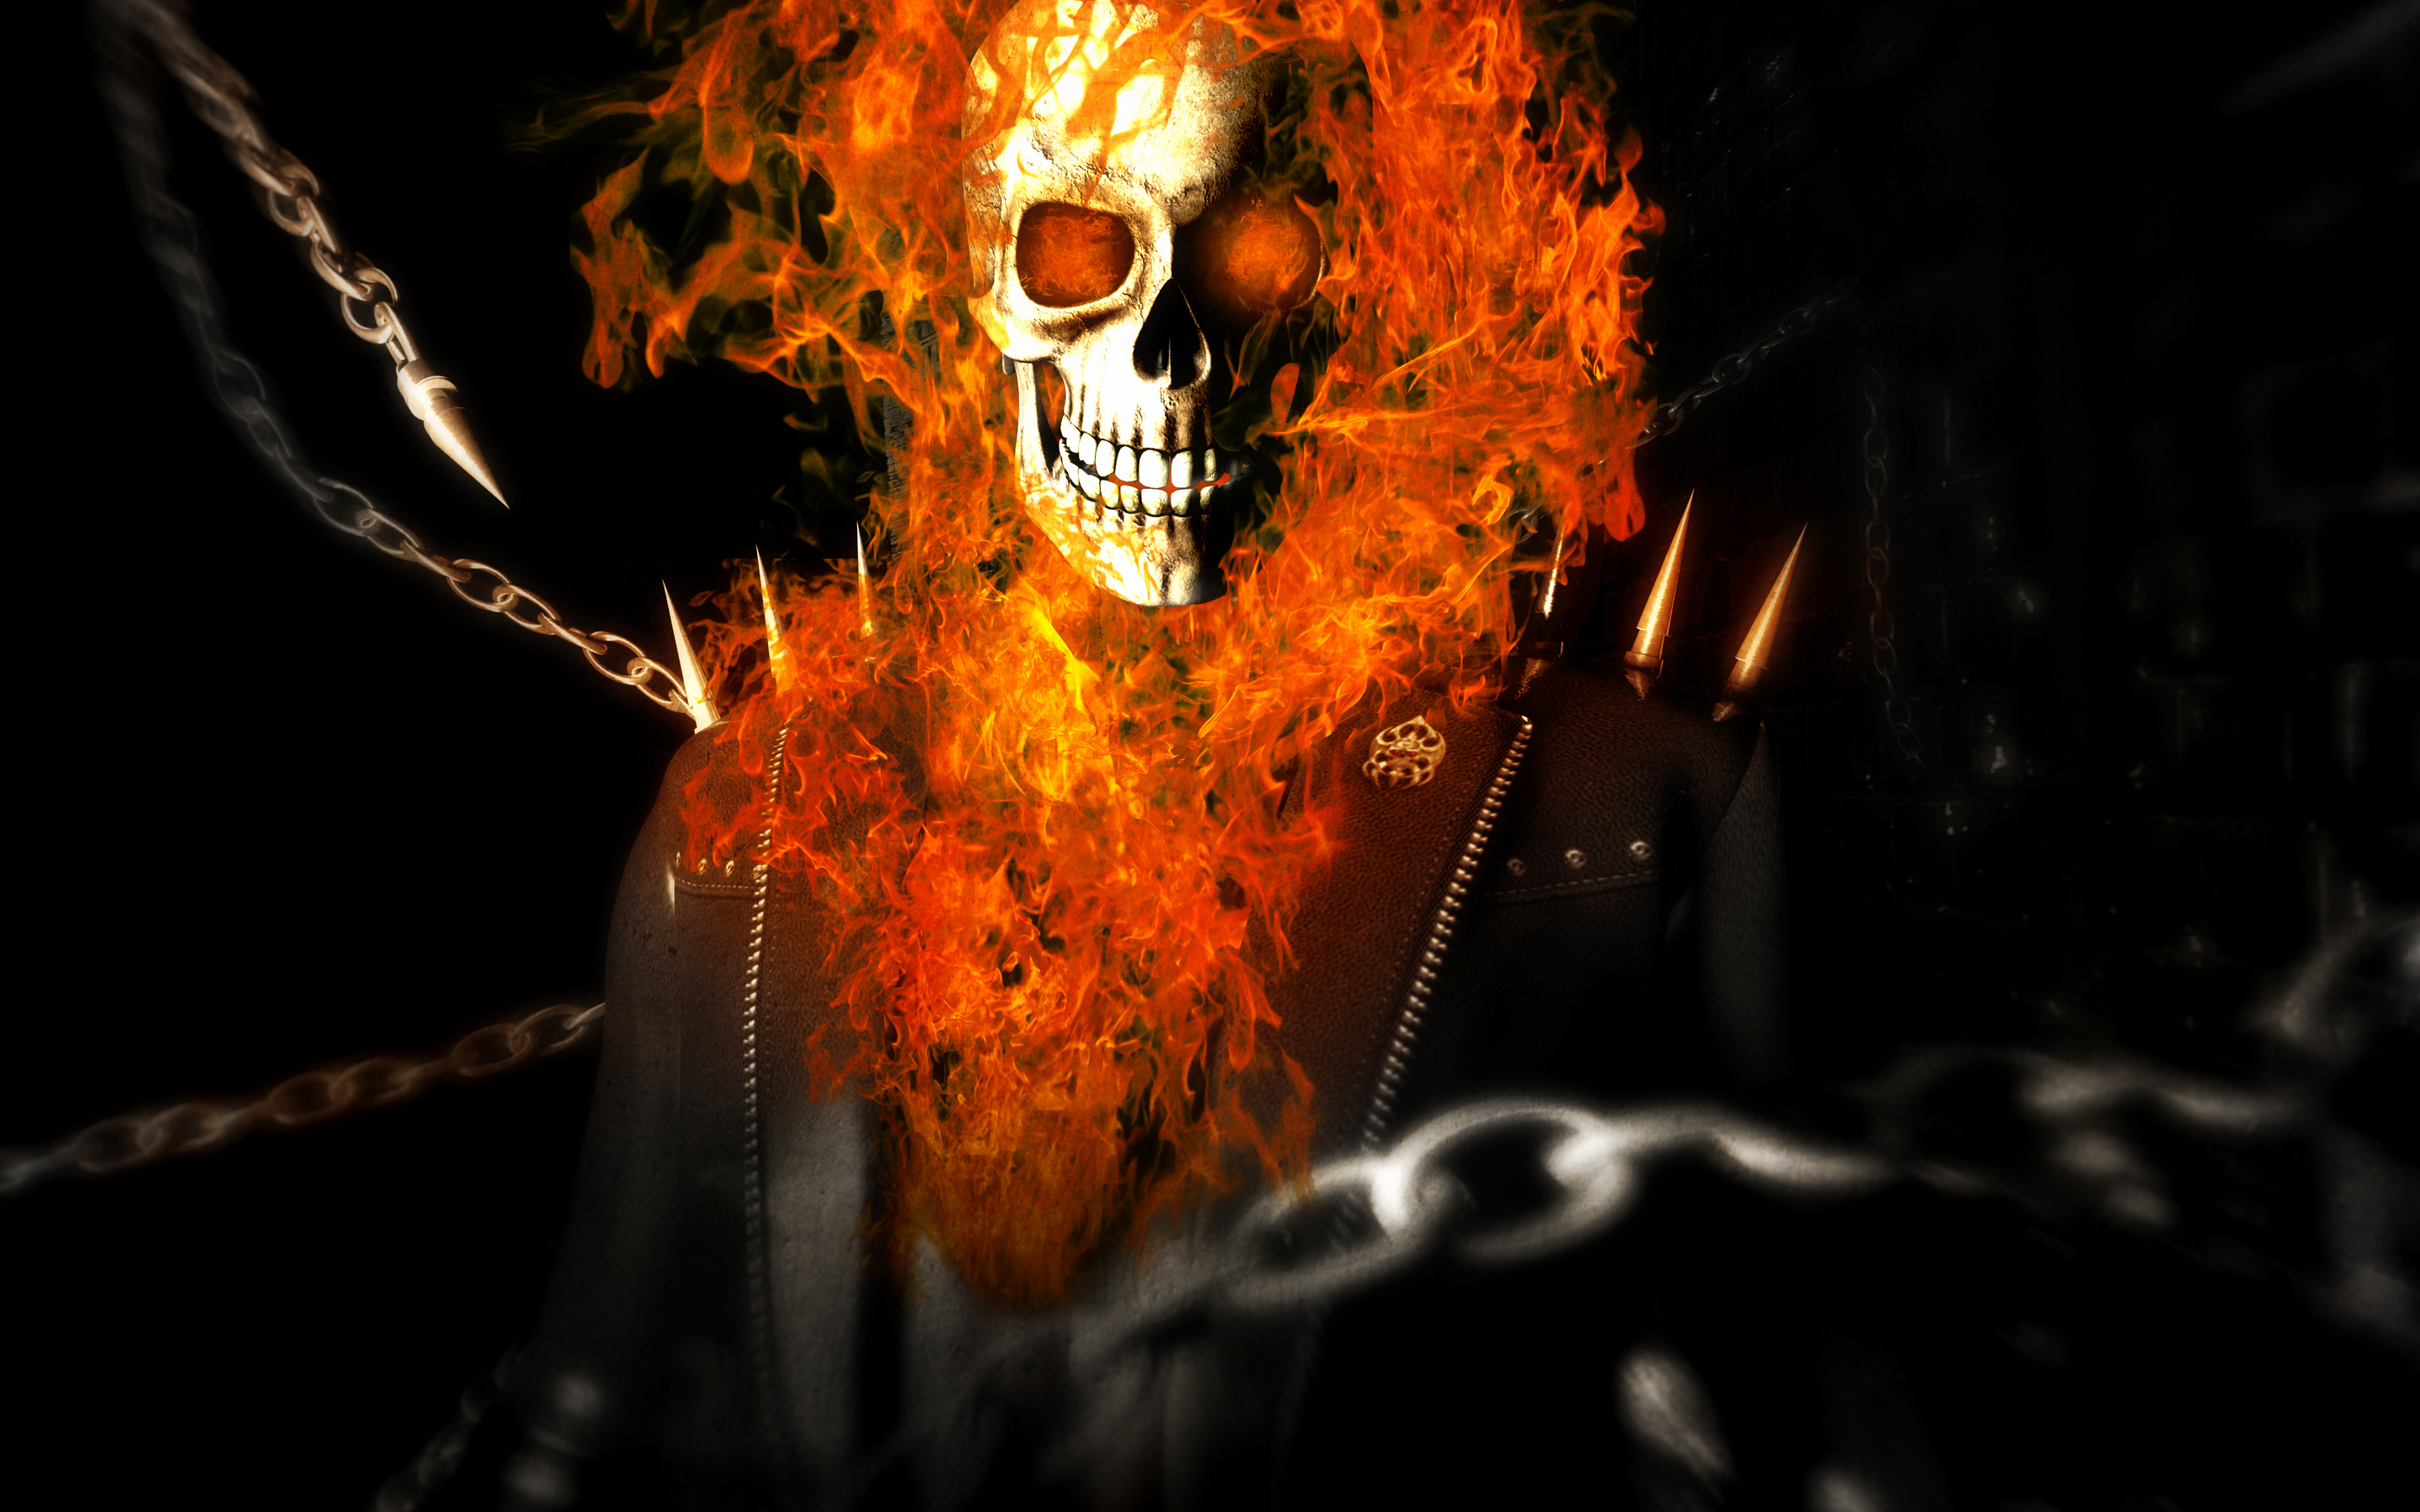 Ghost Rider Art 4k In 2880x1800 Resolution. ghost-rider-art-4k-yk.jpg. 